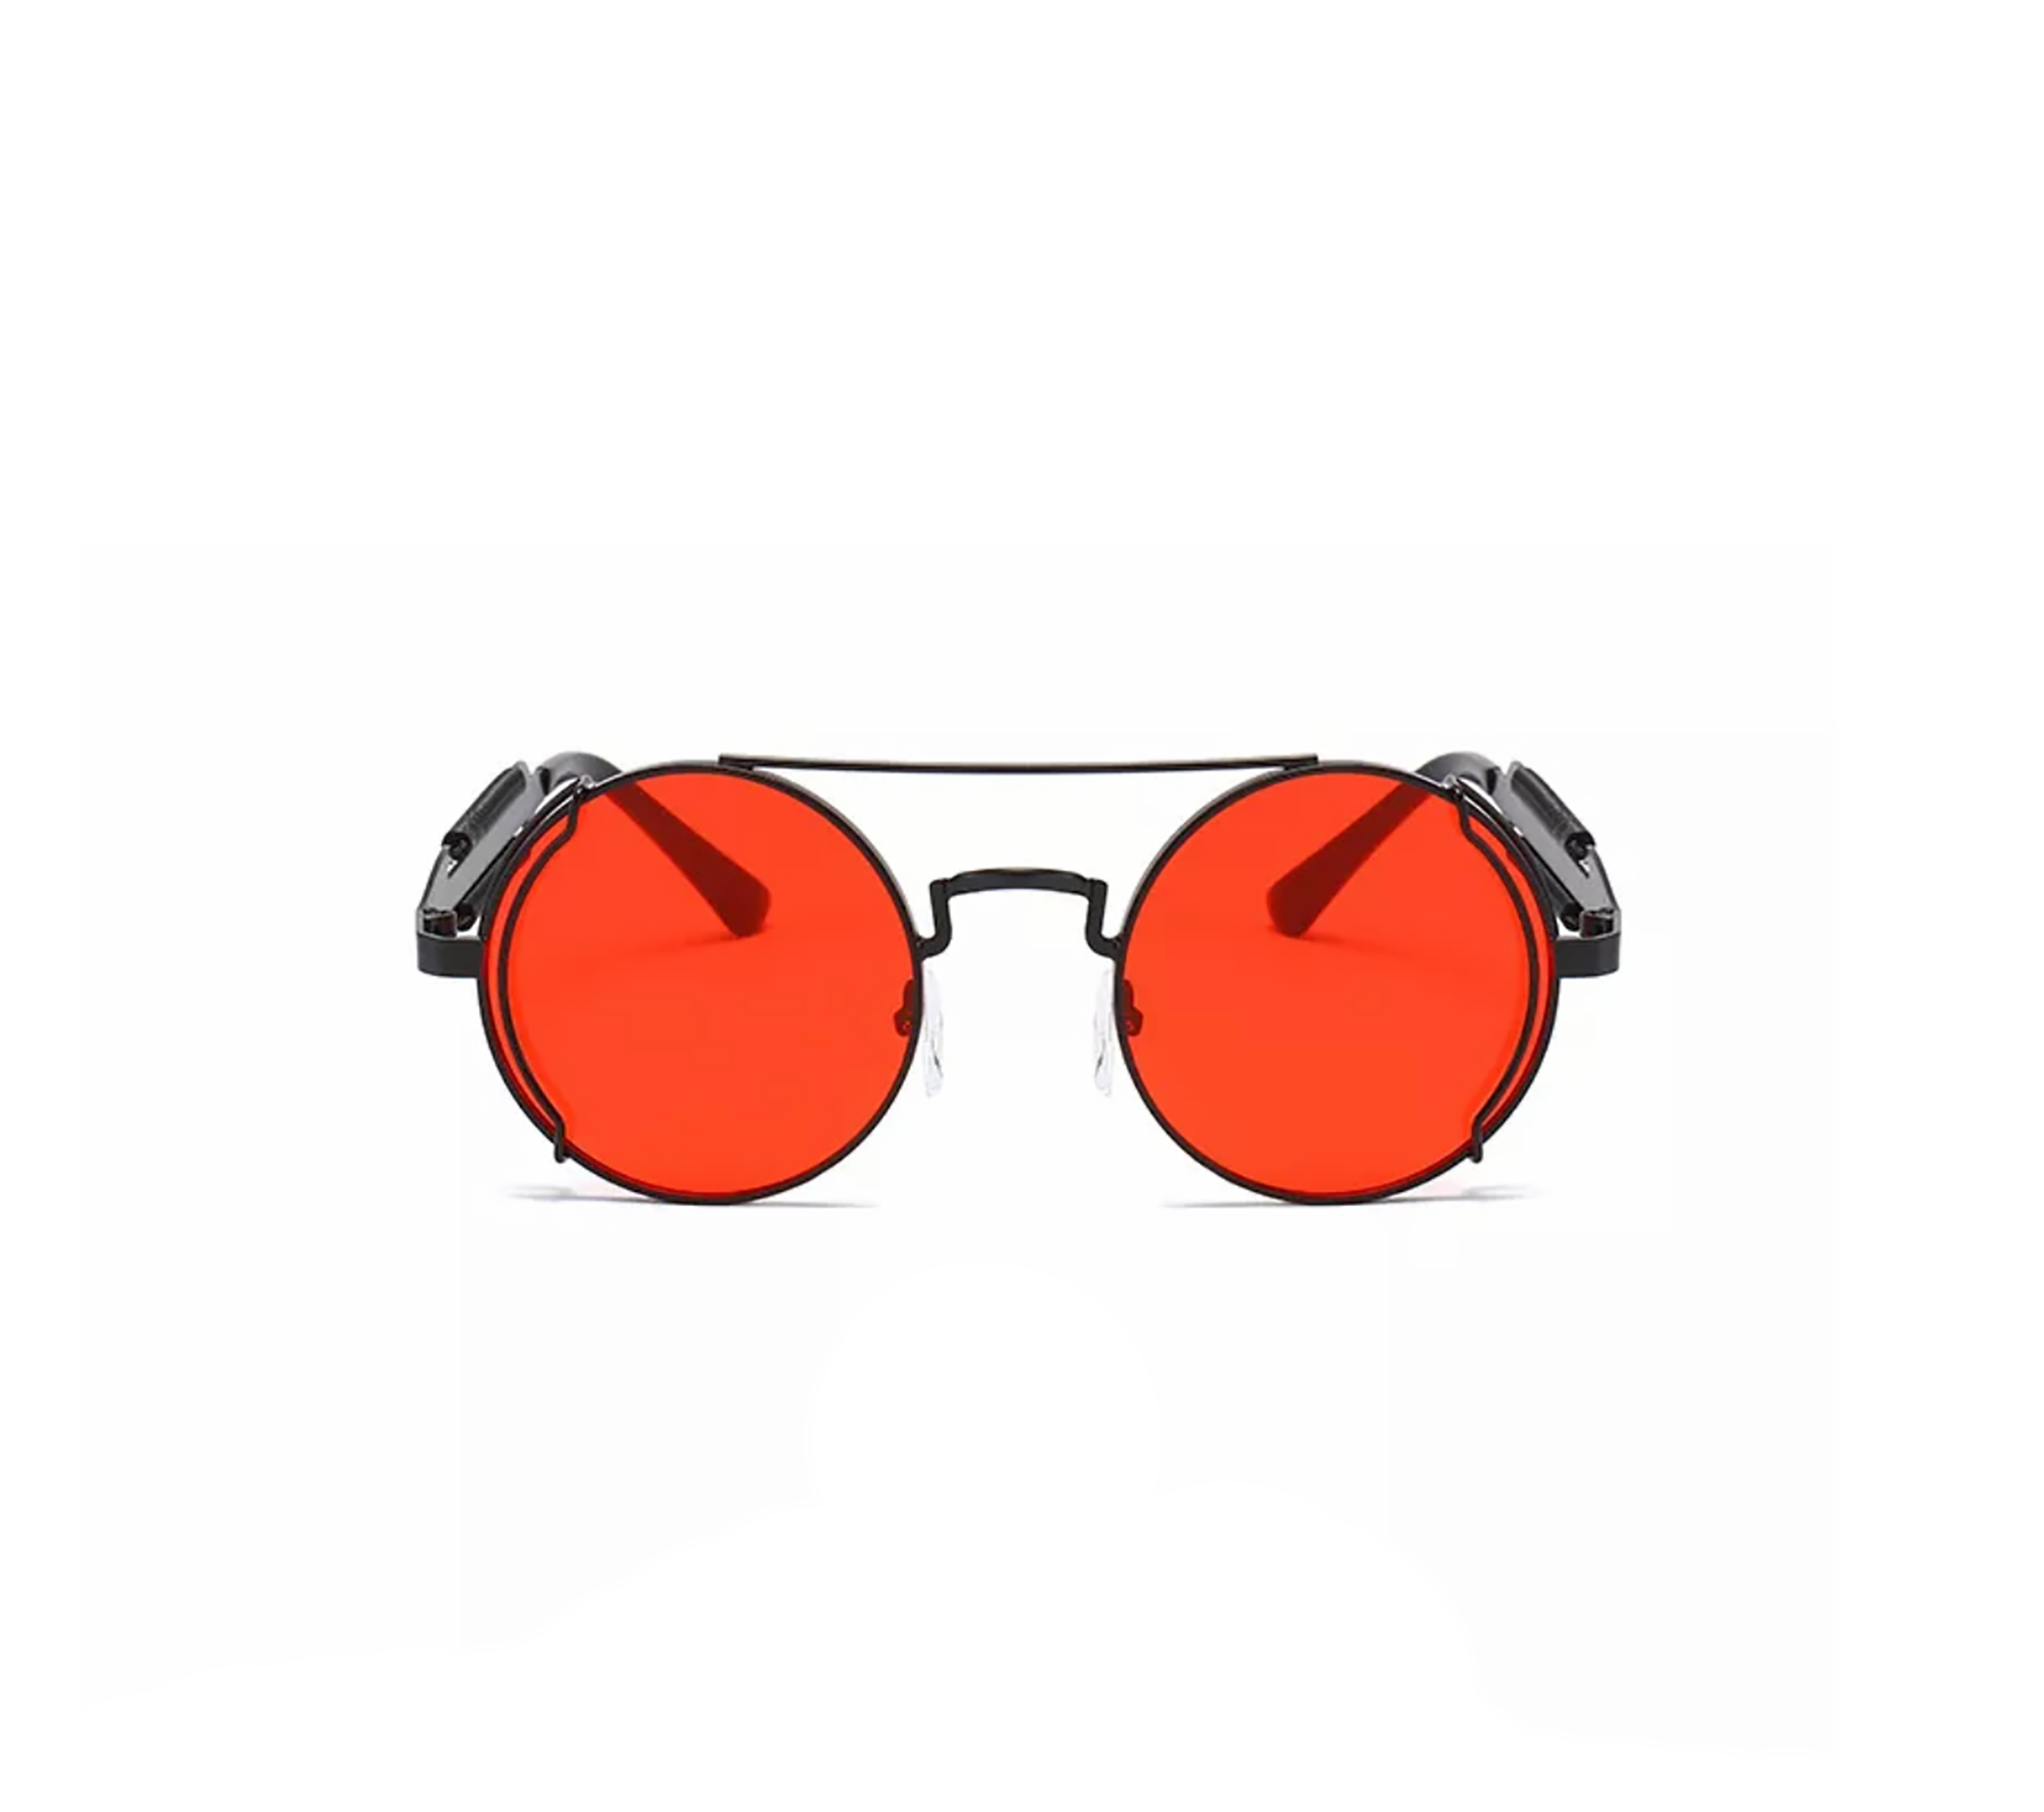 Red/Black Sunglasses Spring frame